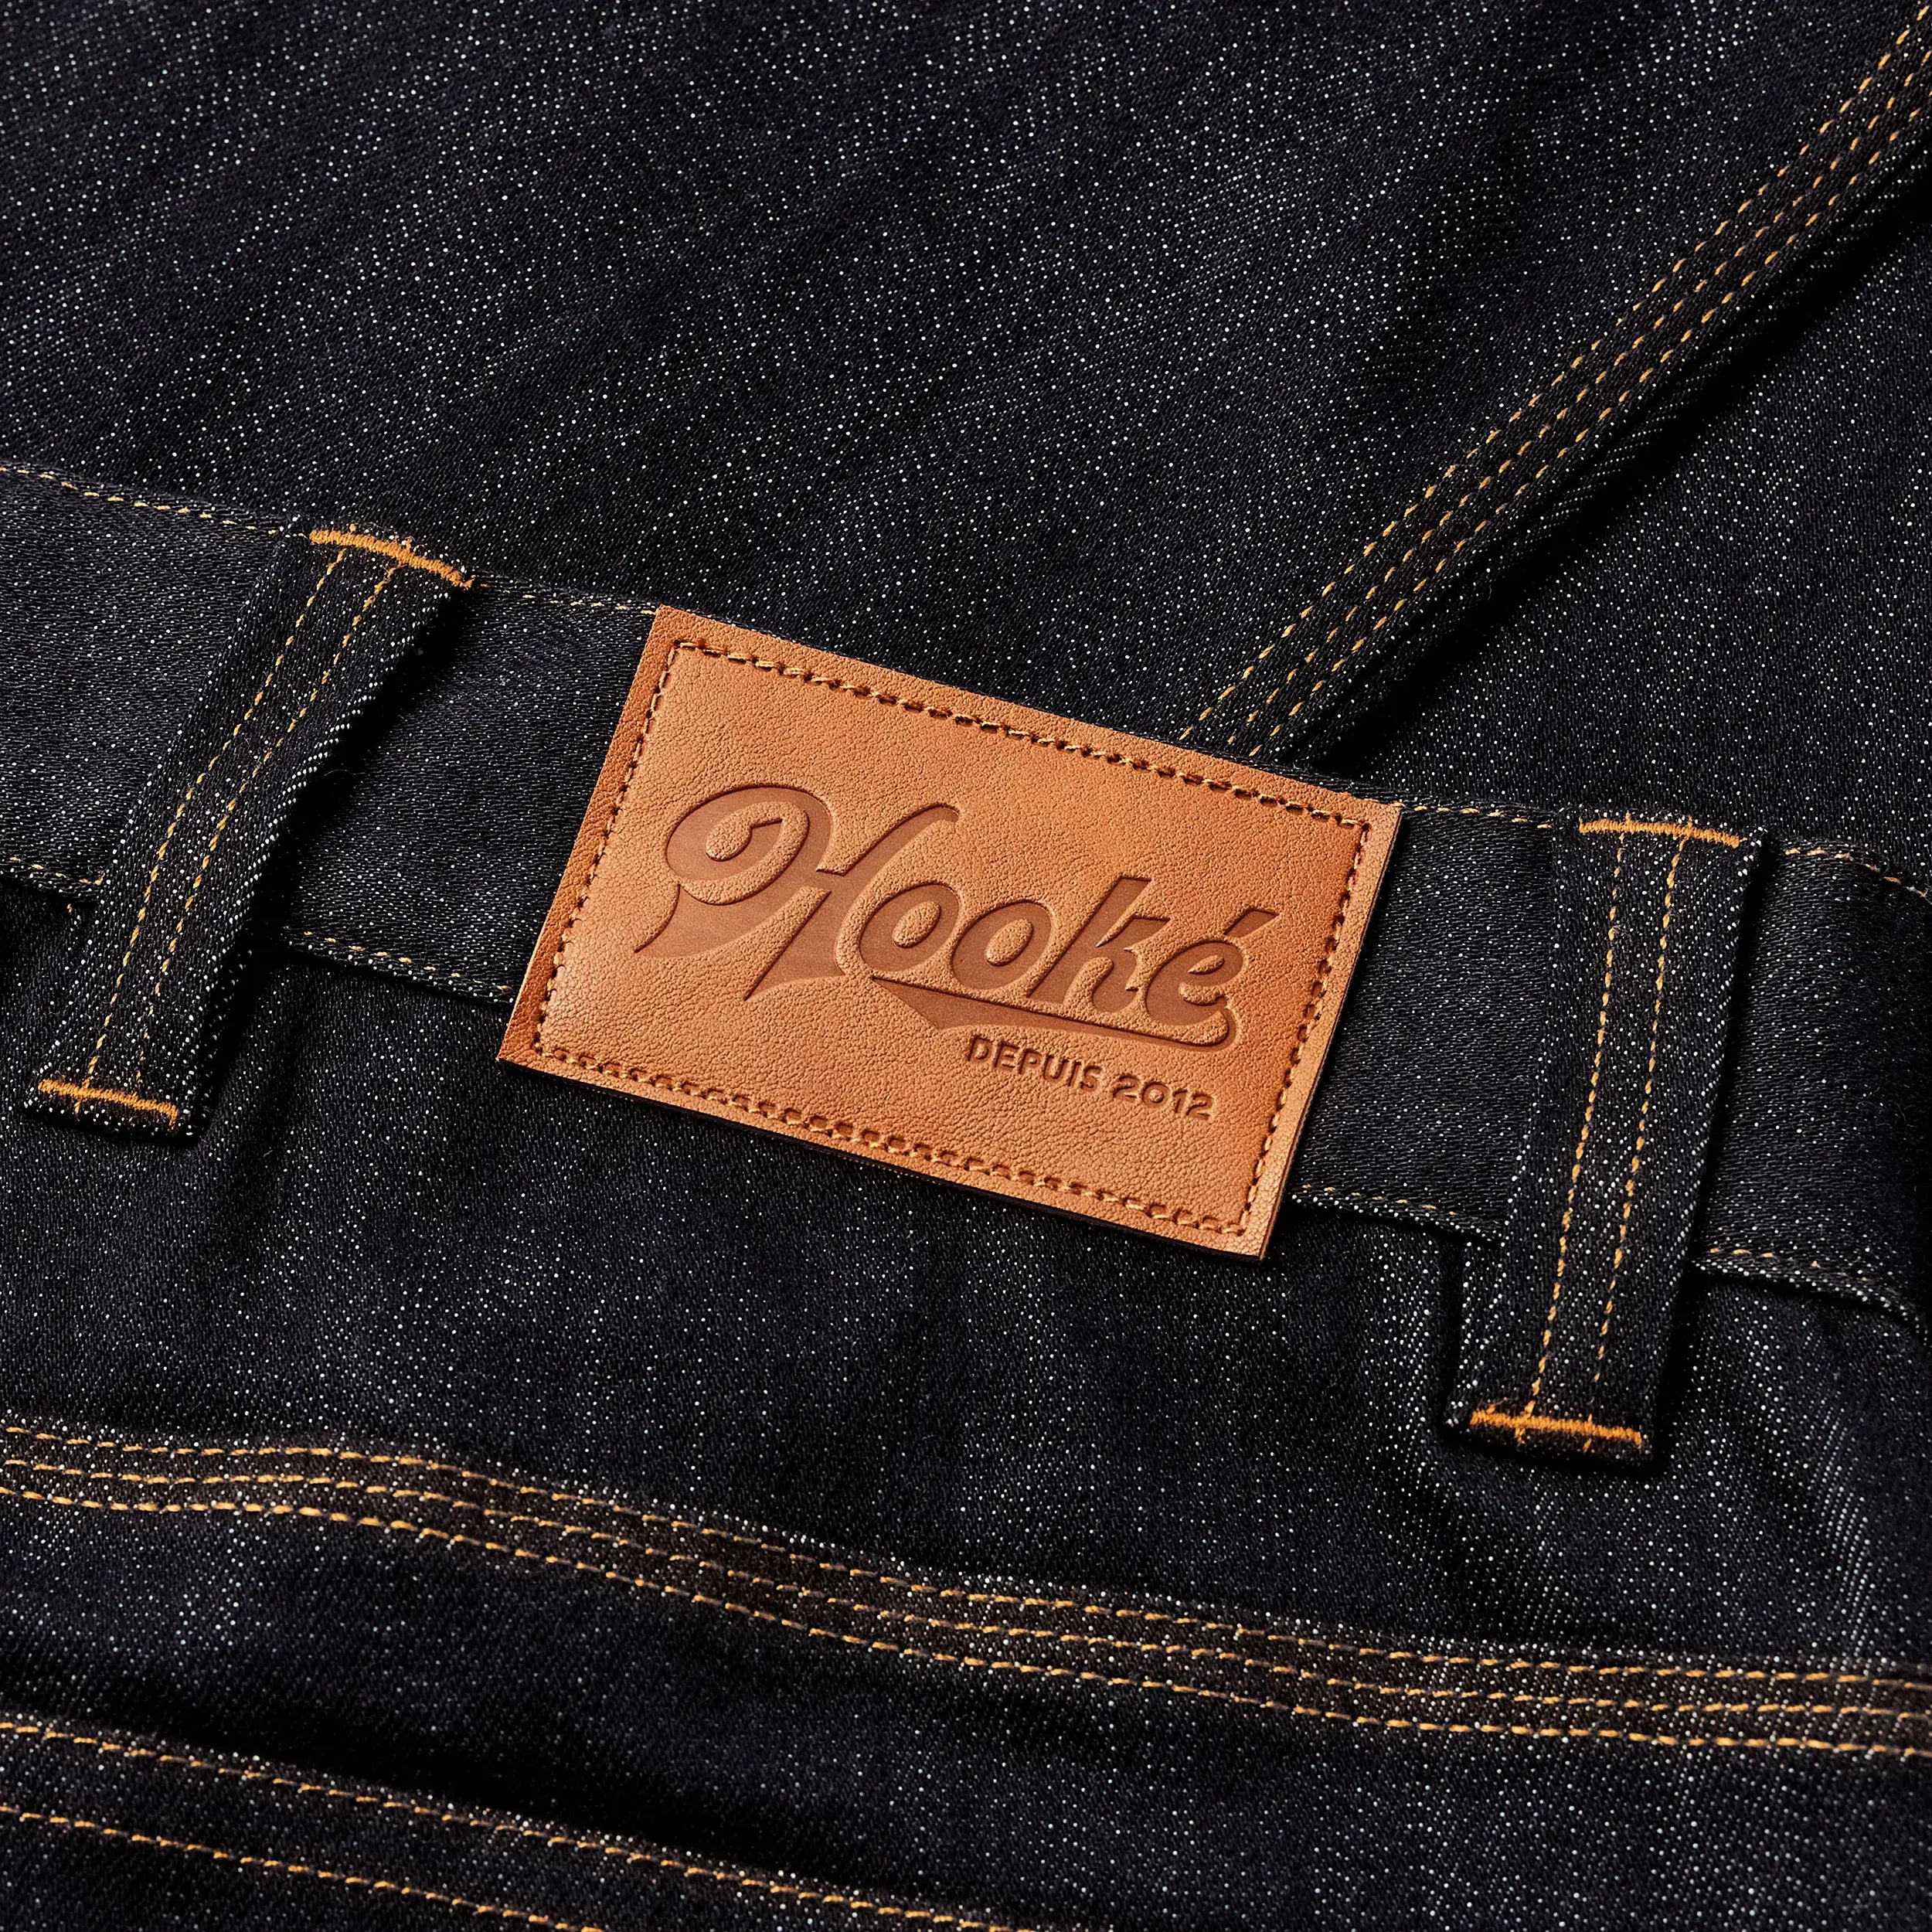 M's Denim Pants - Hooké